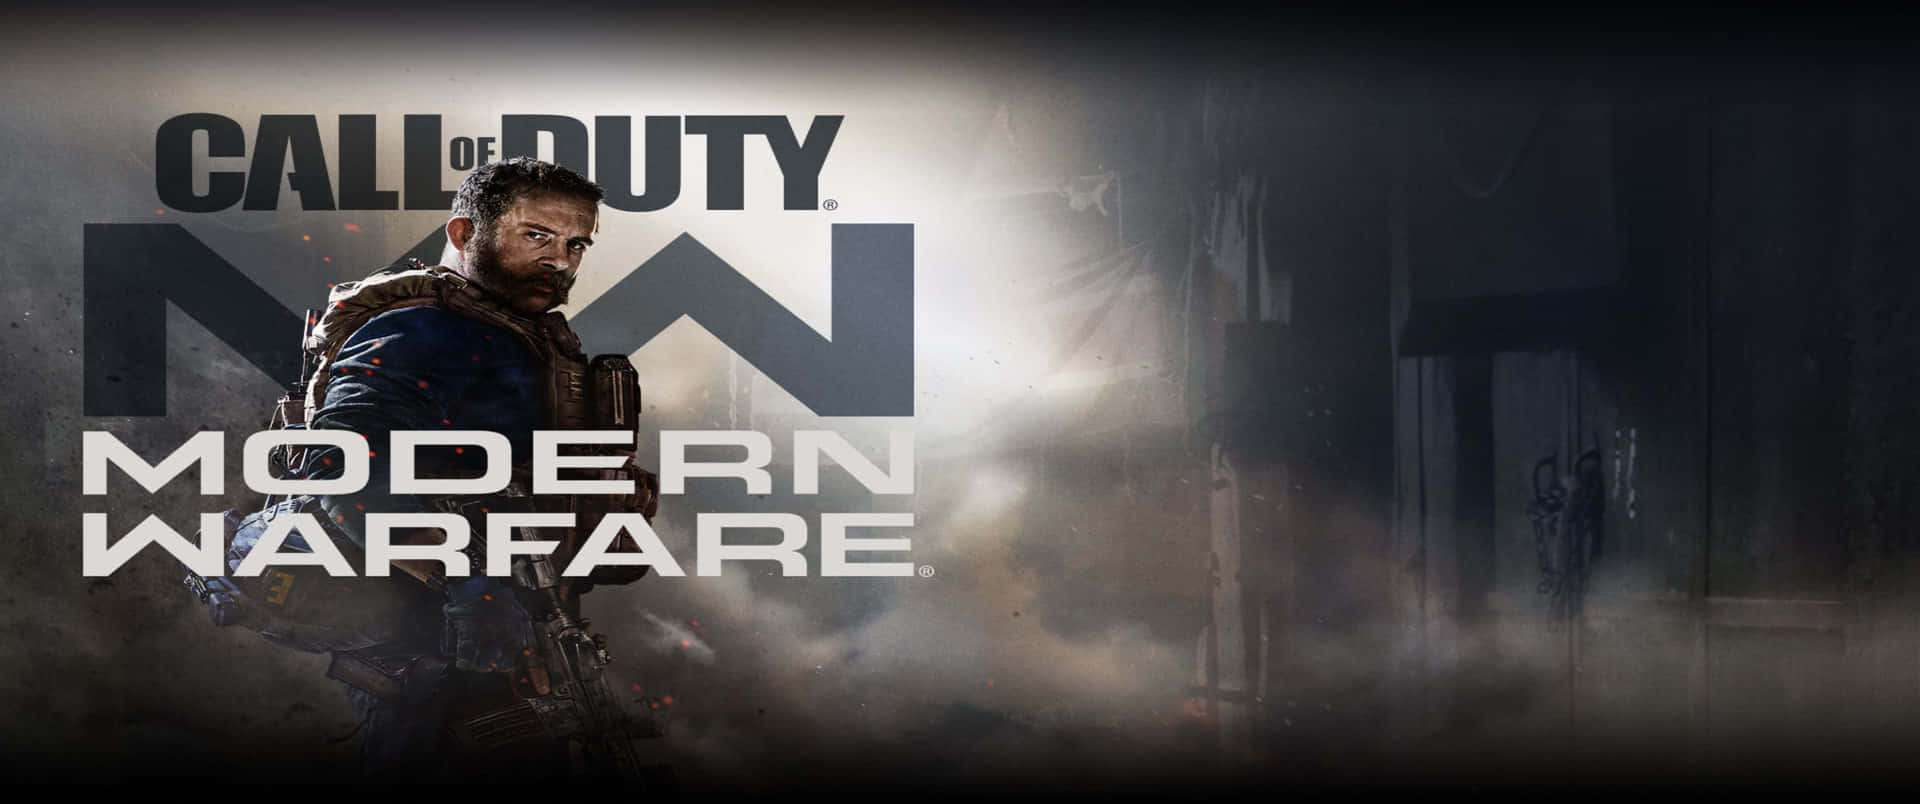 Johnprice Titel 3440x1440p Call Of Duty Modern Warfare Bakgrundsbild